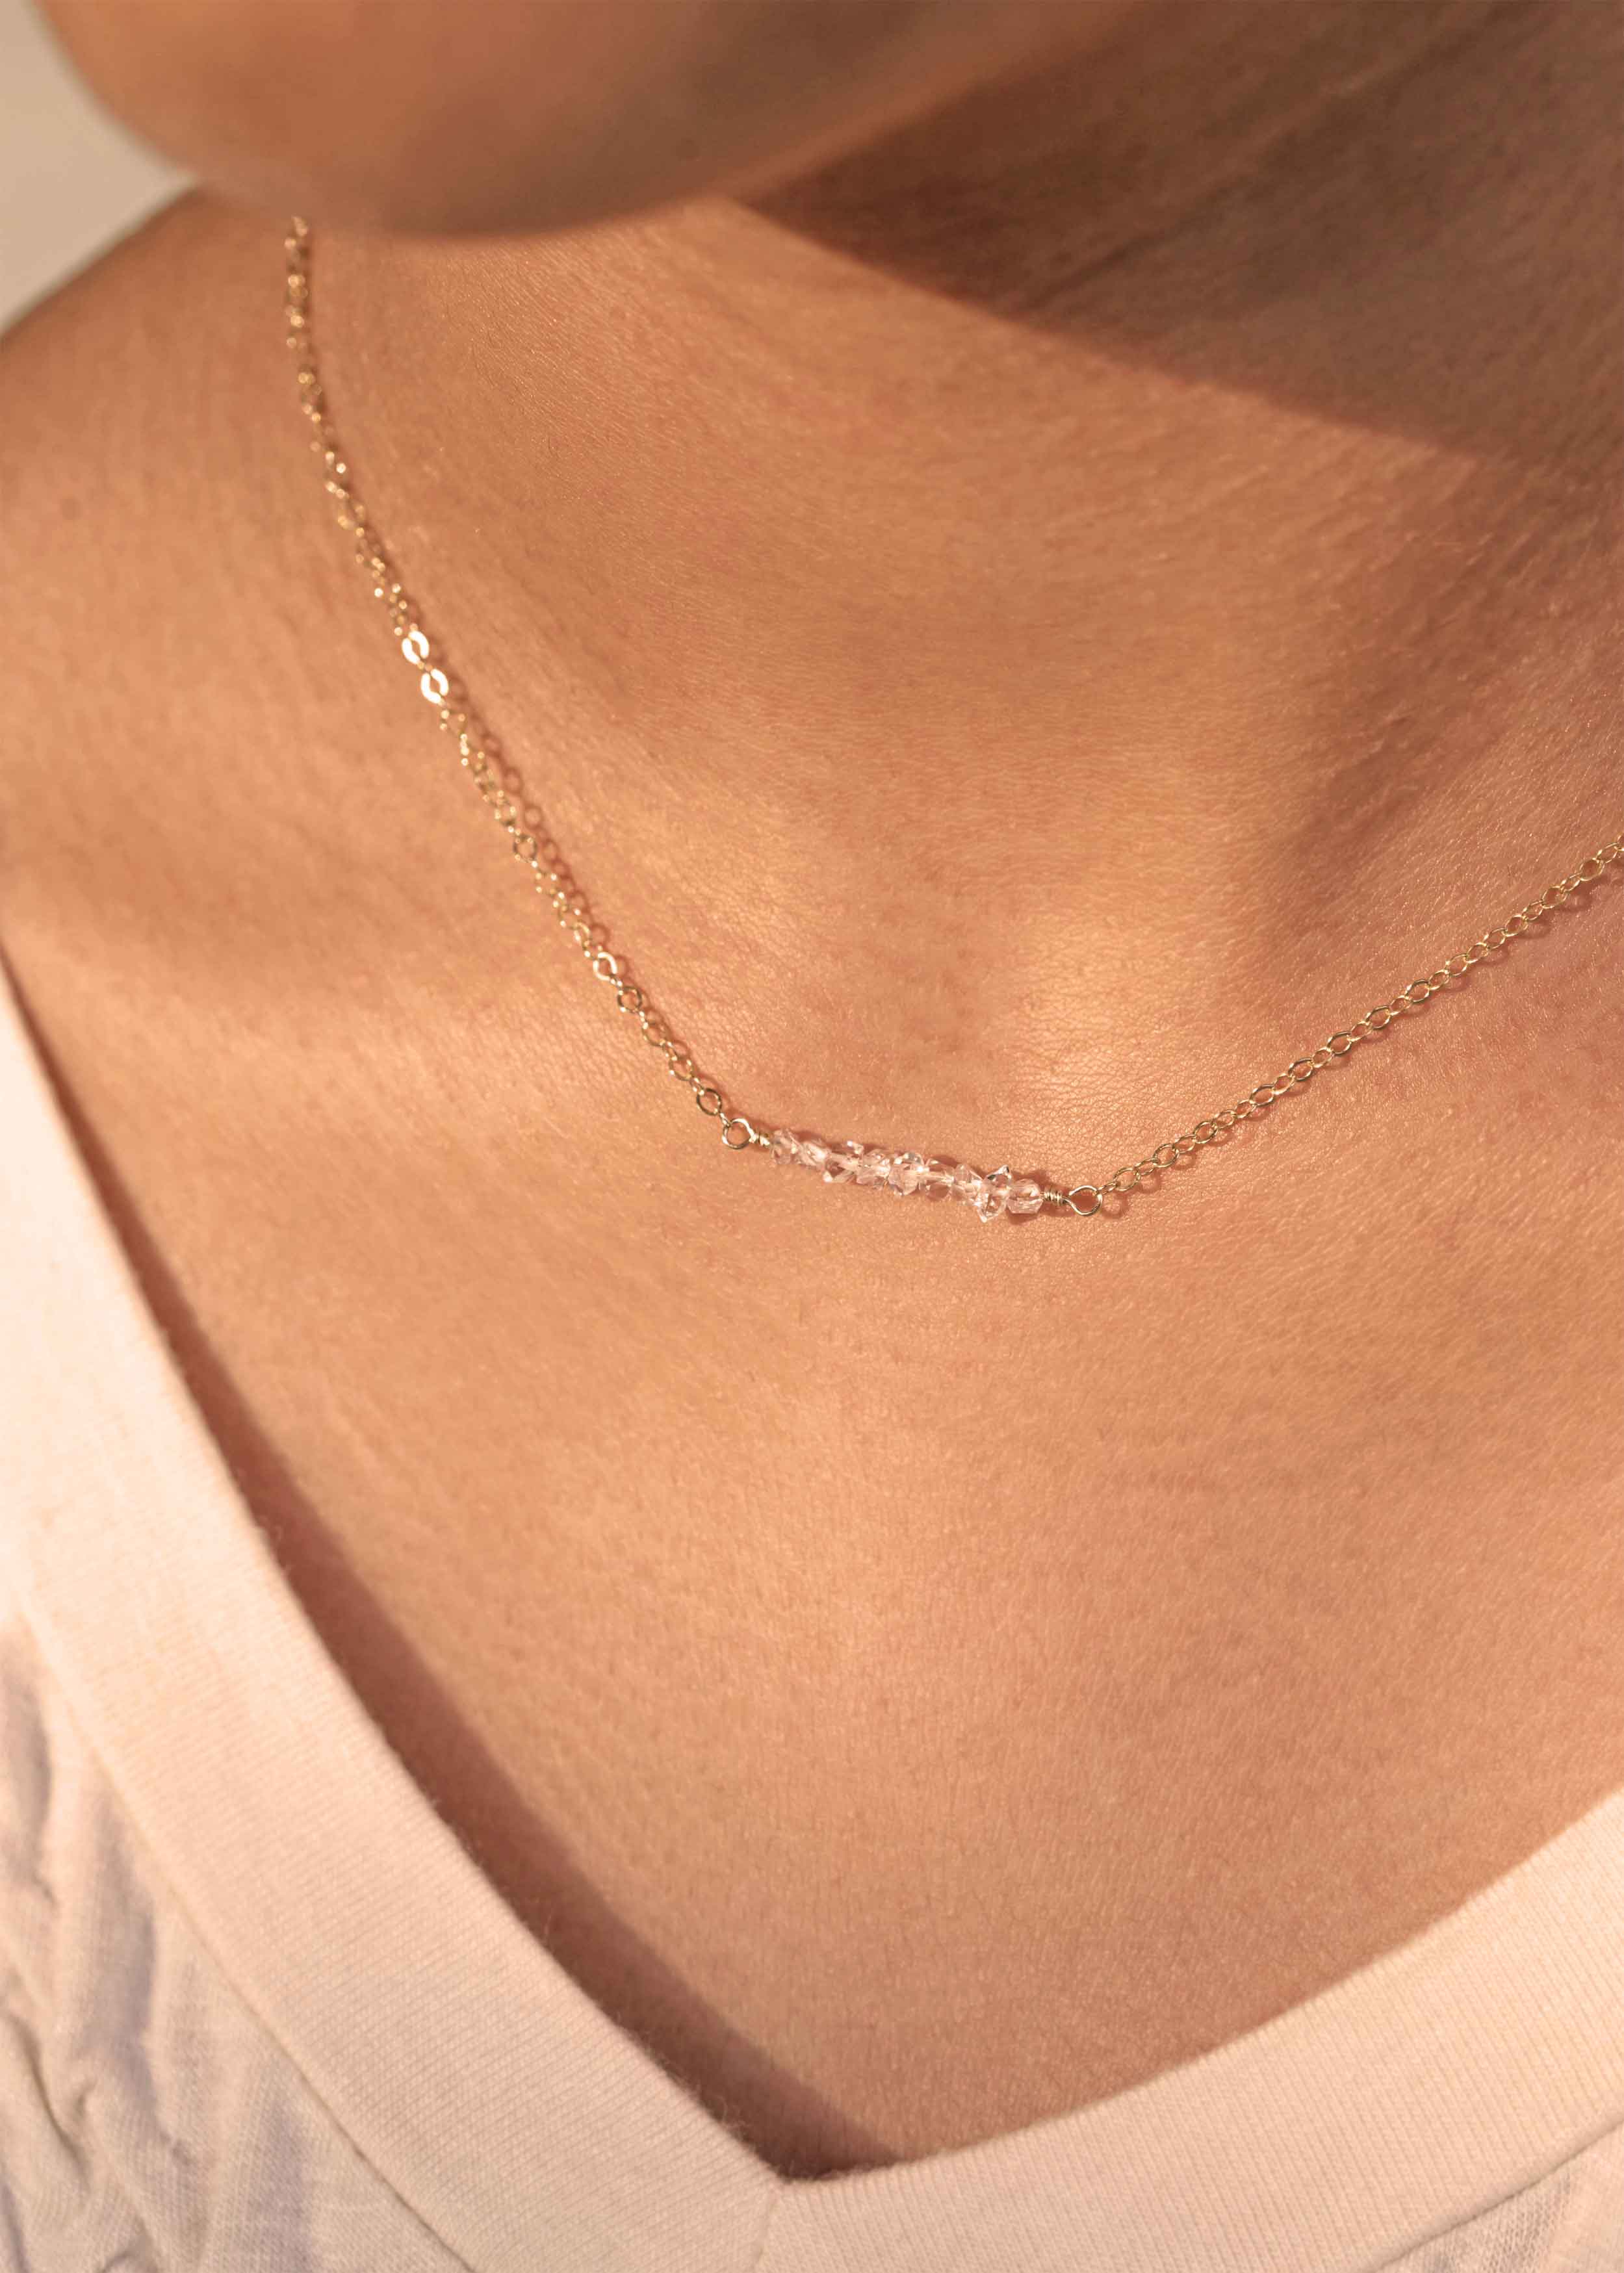 Herkimer Diamond Sparkle Bar Necklace, Bridal Wedding Necklace Choker